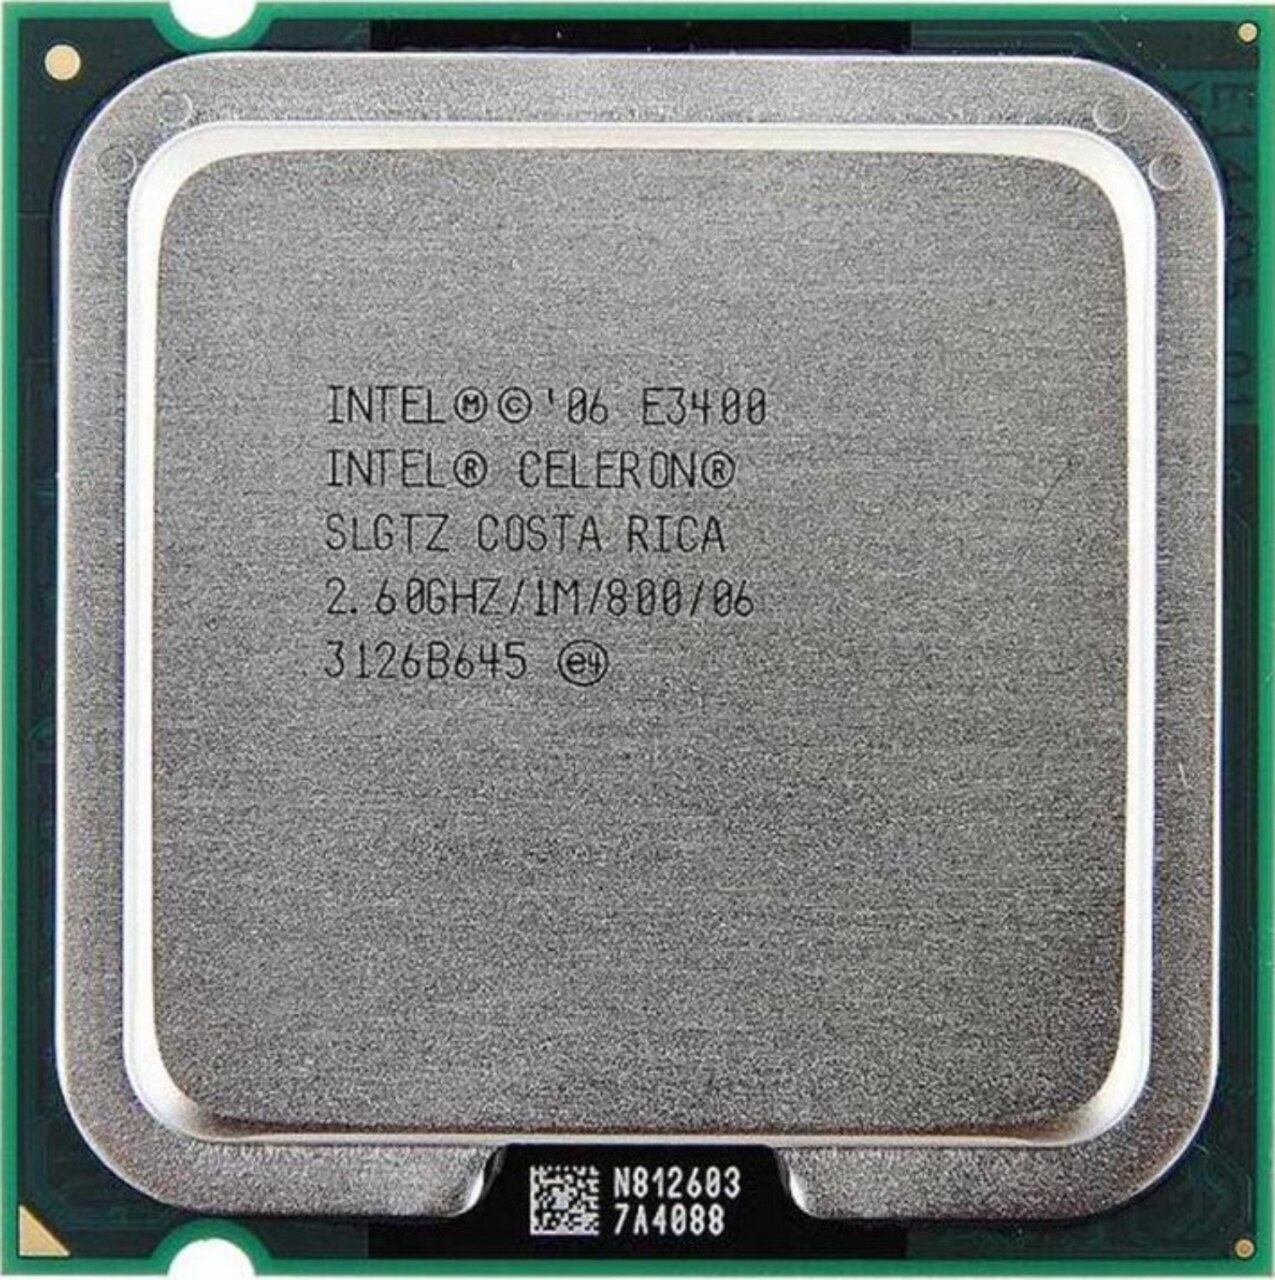 Интел коре 8400. Процессор Intel Core 2 Duo e7500 Wolfdale lga775, 2 x 2933 МГЦ, OEM. Процессор Intel Celeron e3200 Wolfdale. Процессор Intel Core 2 Duo e7500 Wolfdale. Intel Core 2 Duo e8400 lga775, 2 x 3000 МГЦ.